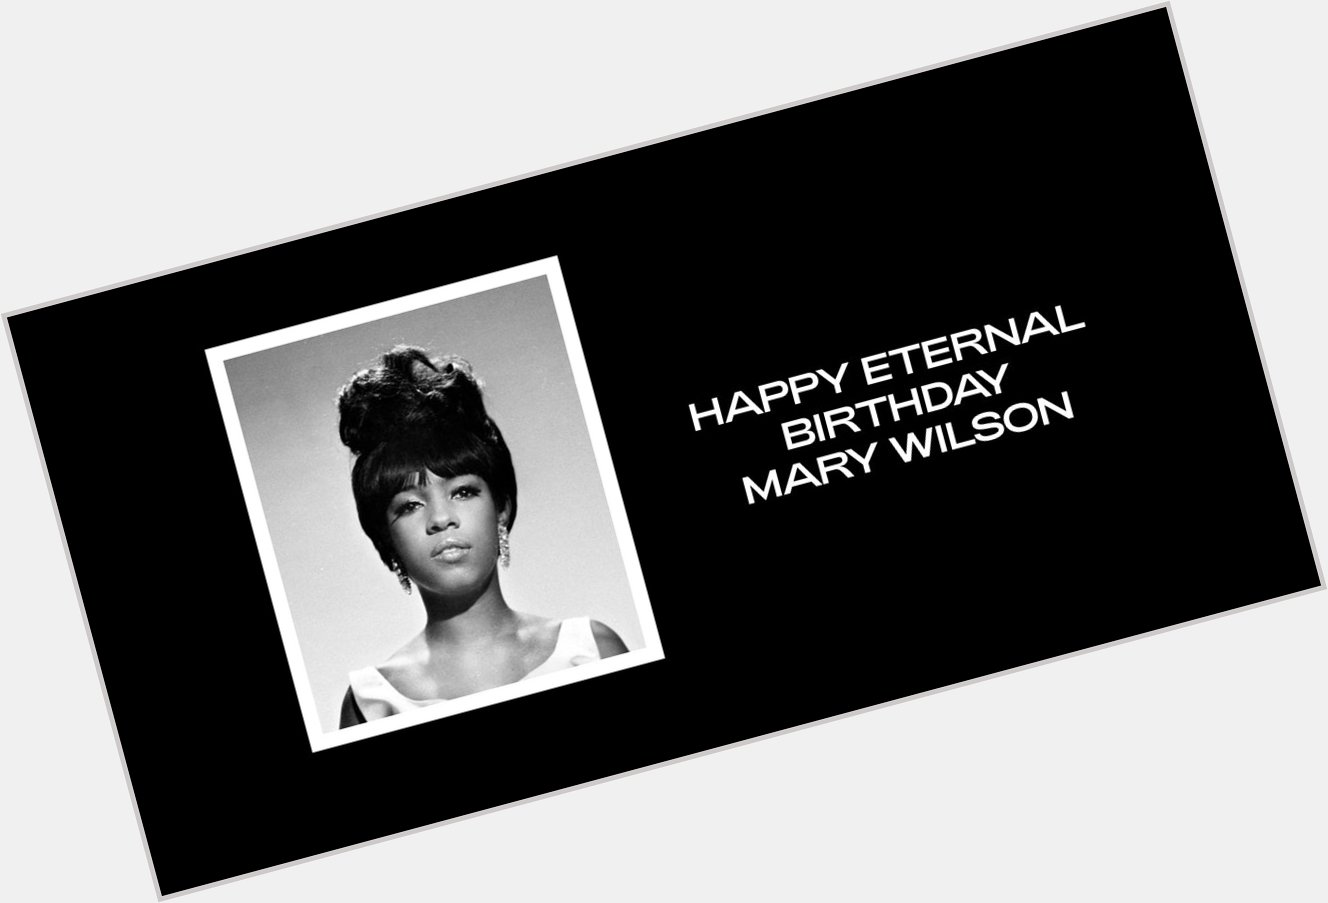 Happy Eternal Birthday, Mary Wilson. 